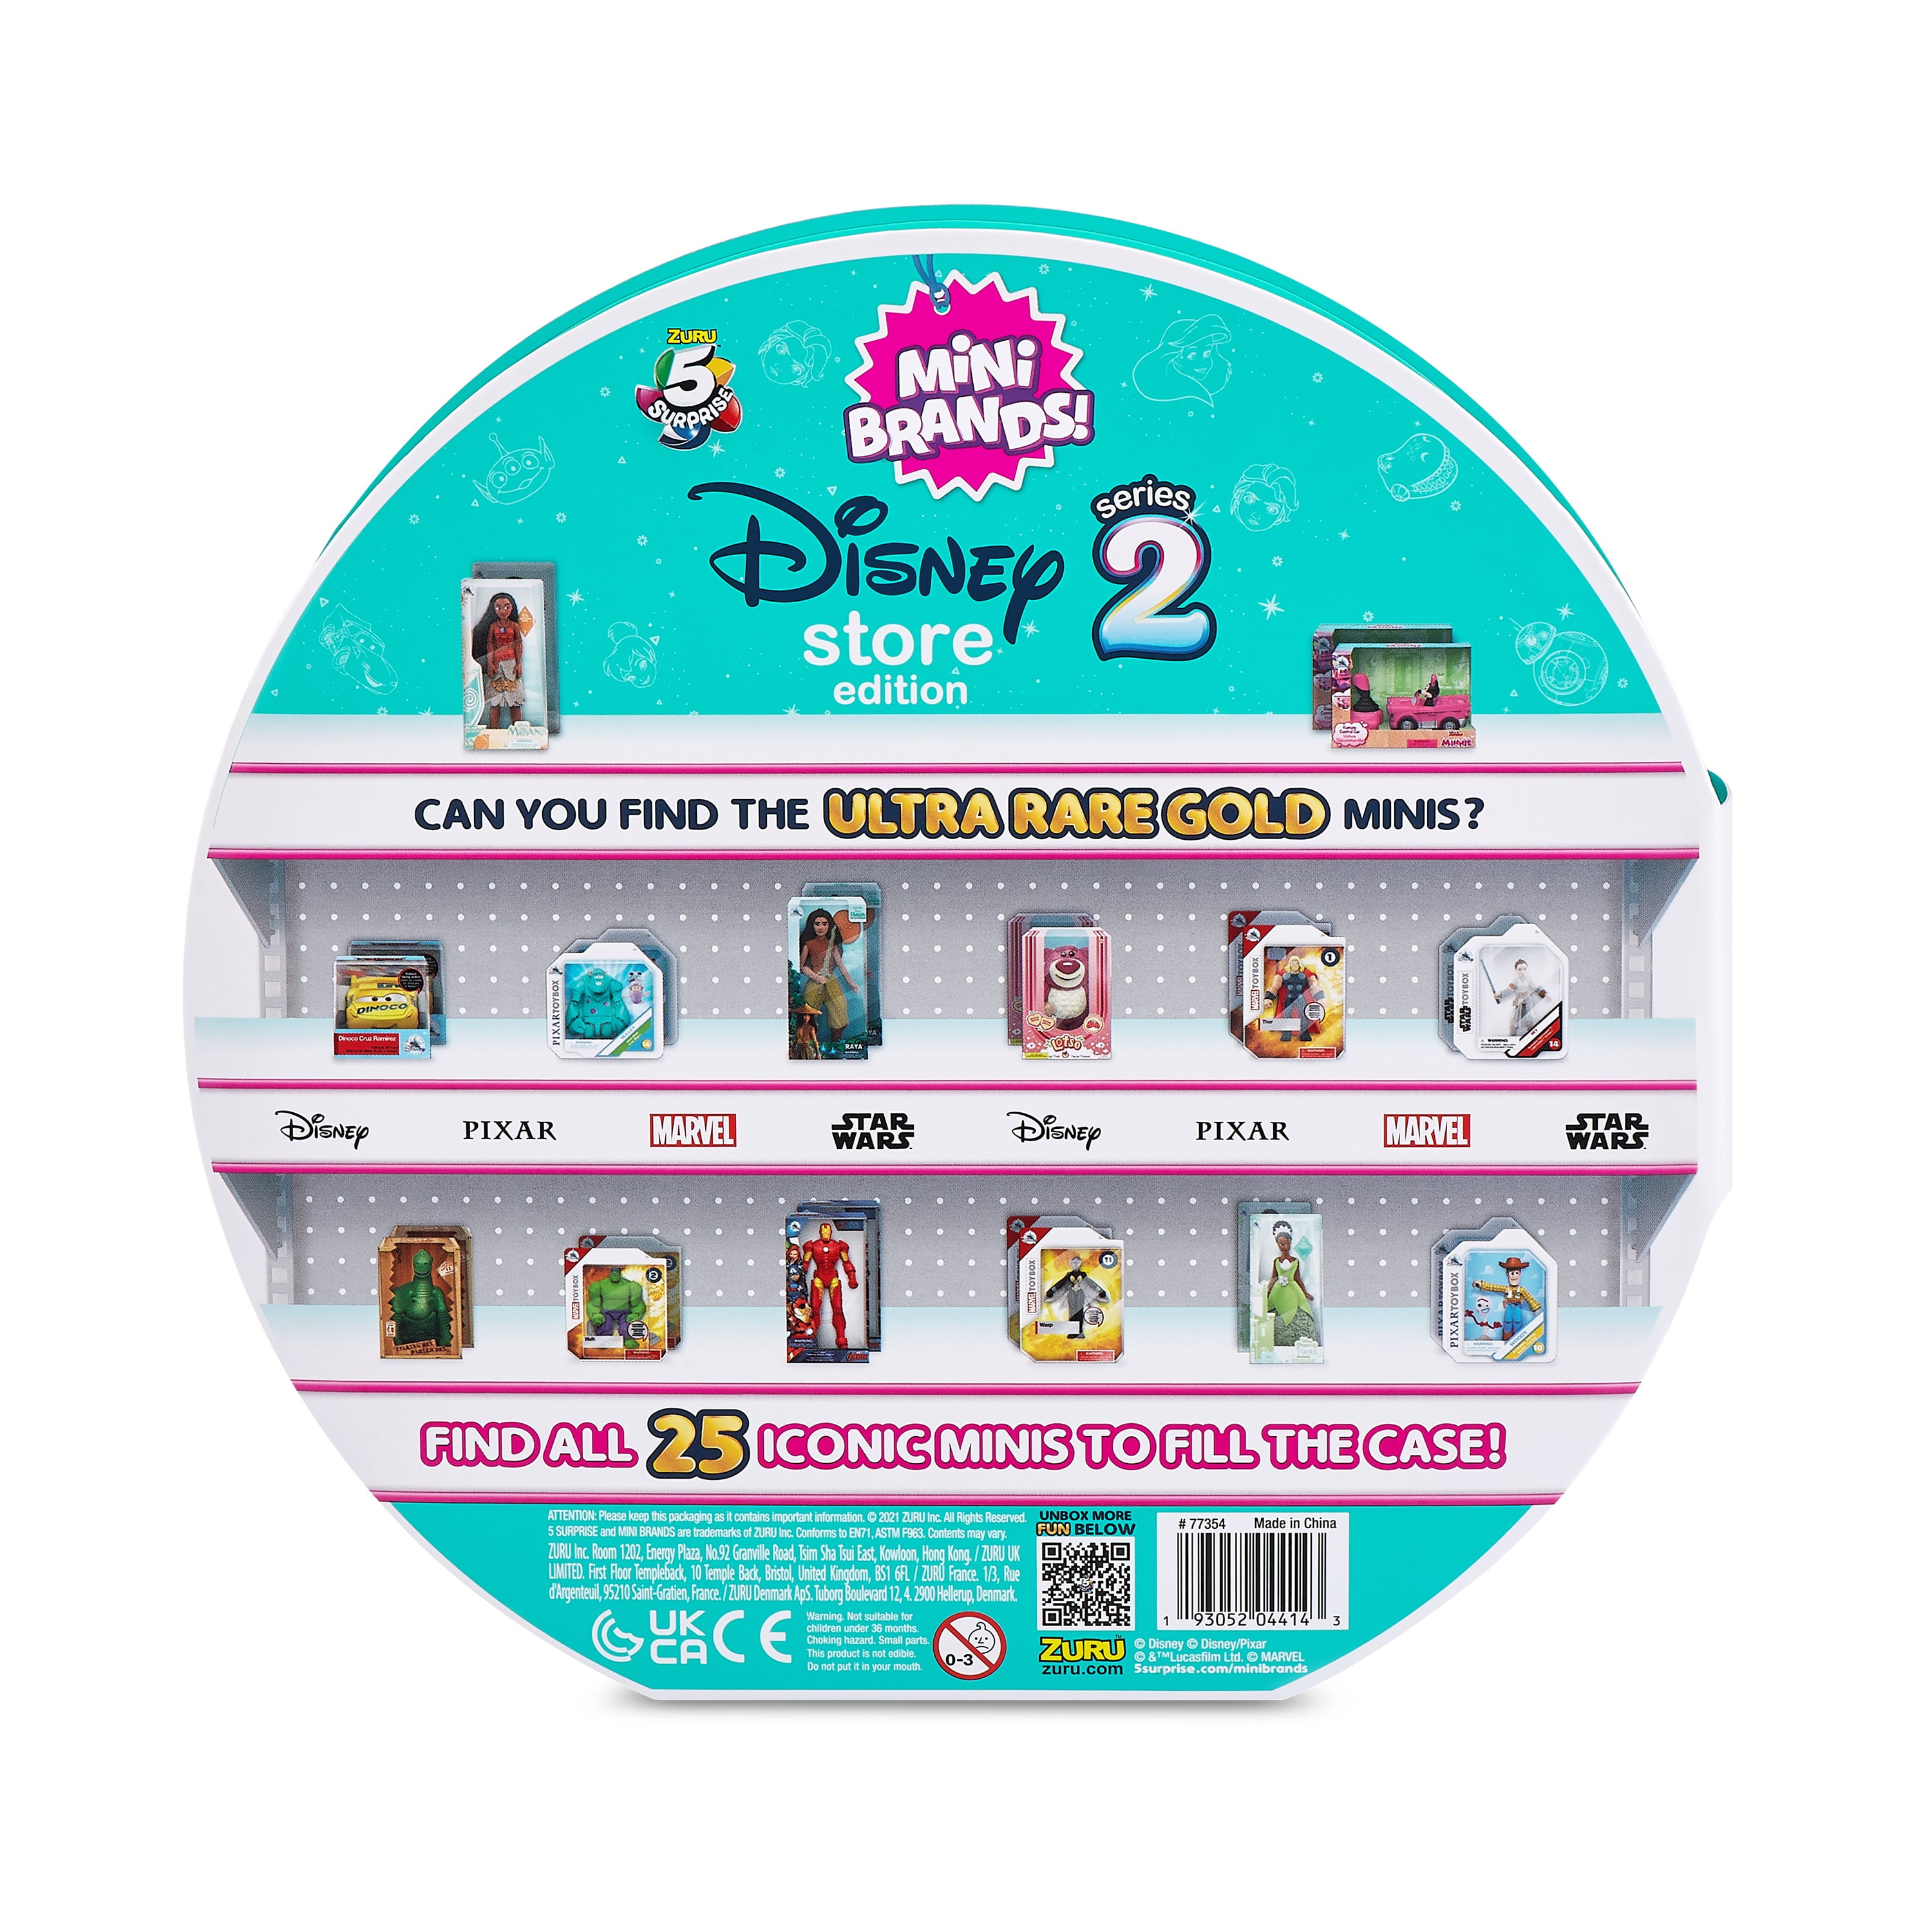 5 Surprise Mini Brands Disney Store Series 2 Collector's Case by ZURU  Novelty & Gag Toy